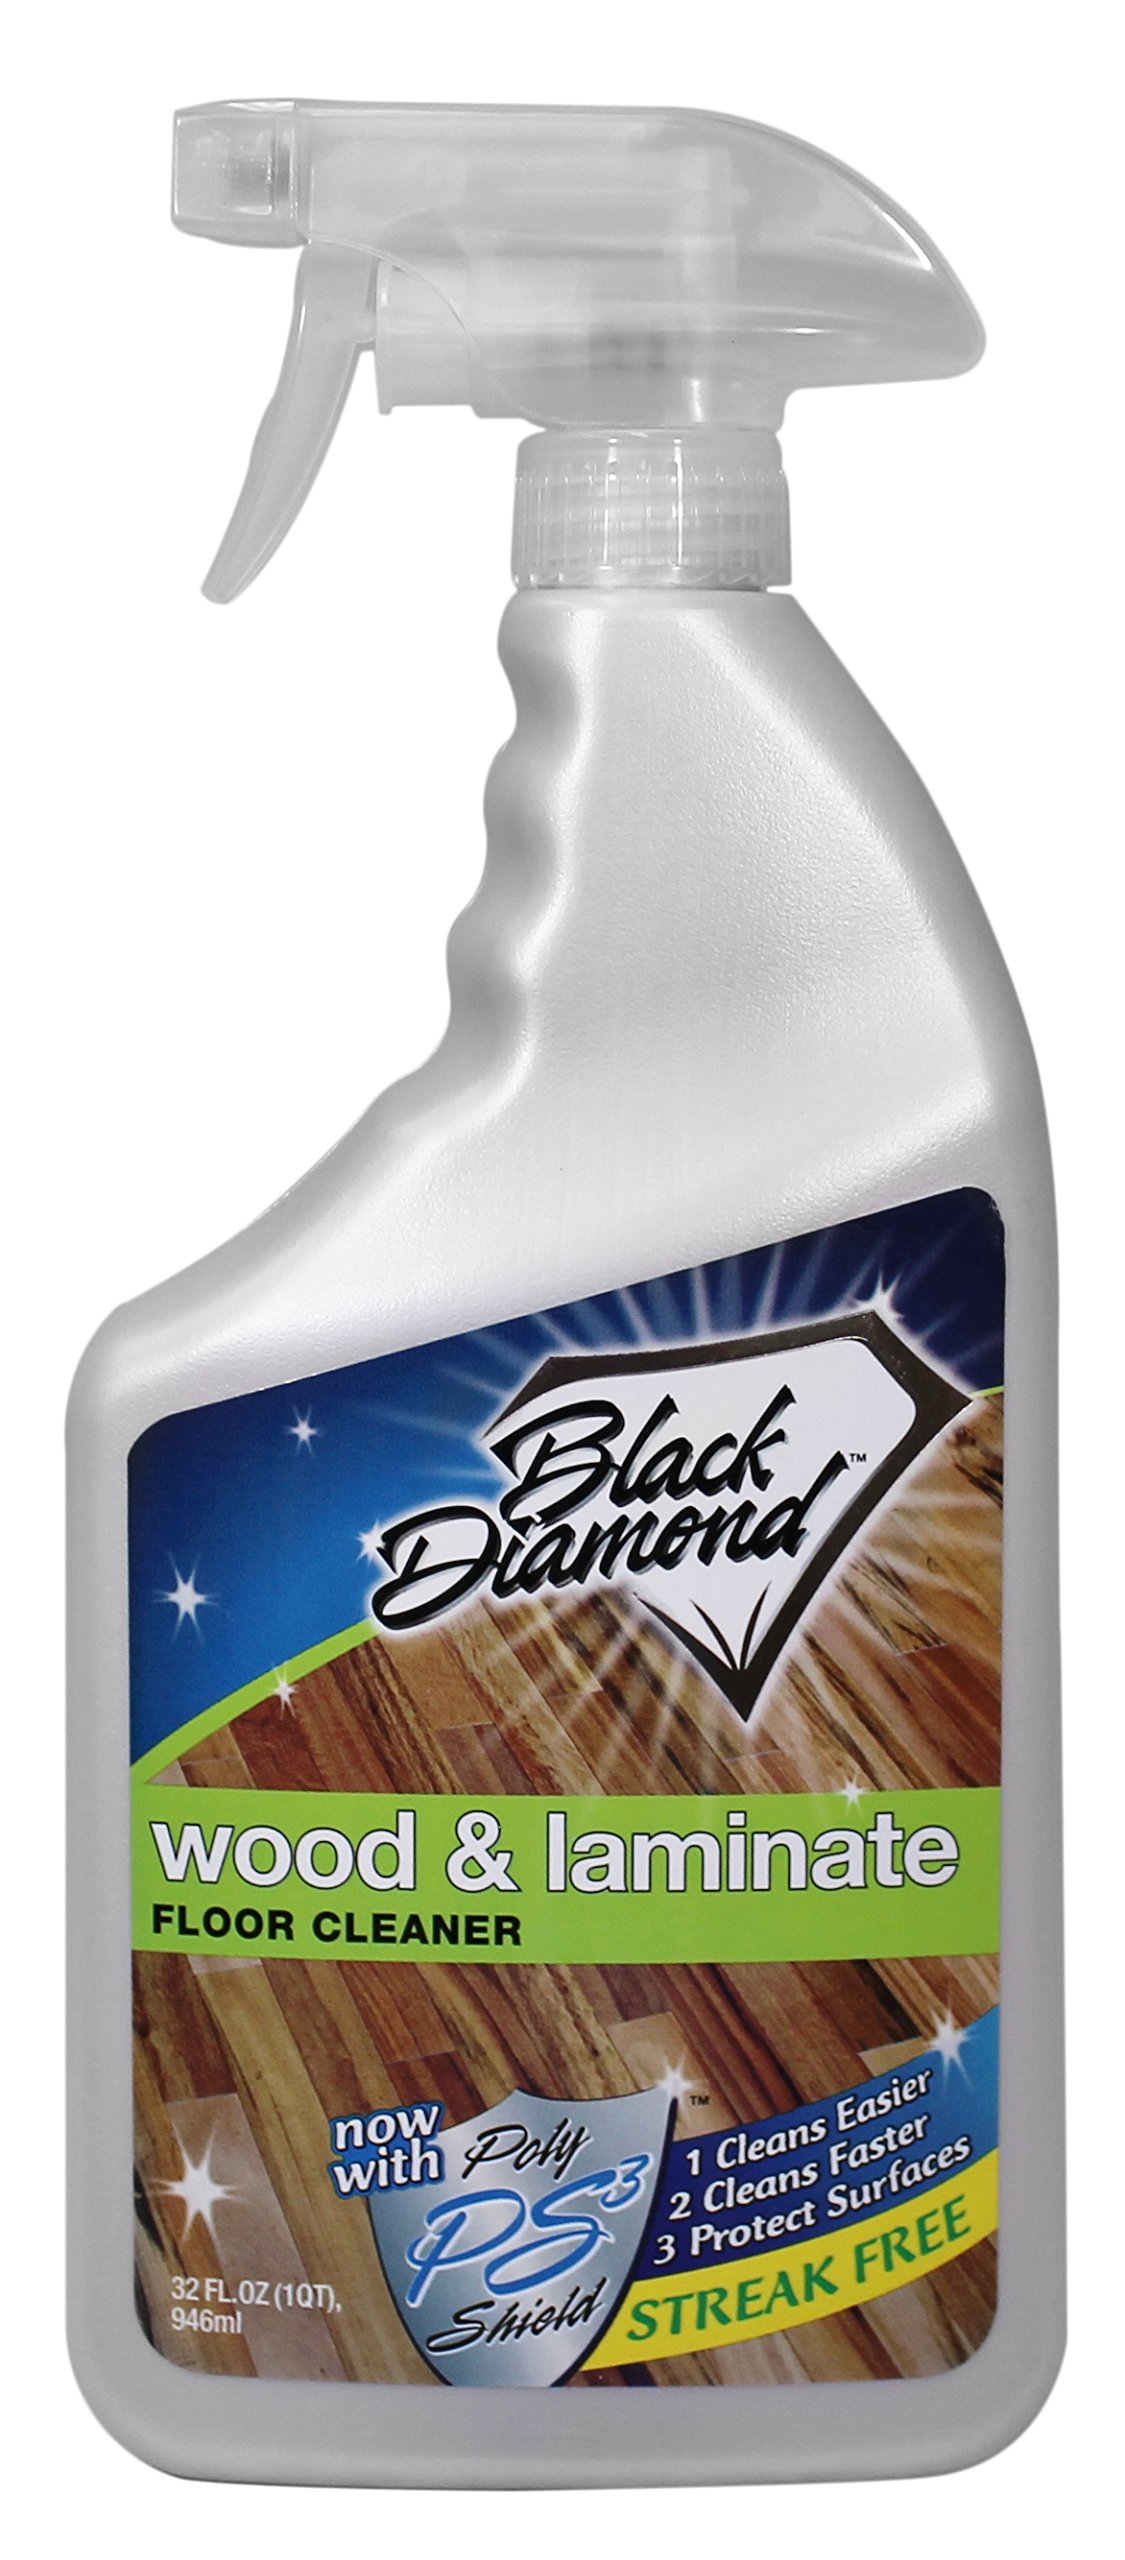 Black Diamond Stoneworks Black Diamond Laminate Floor Cleaner and Hardwood Floor Cleaner Spray - Versatile Solution Safe for Vinyl Floors, Wood Floors, a